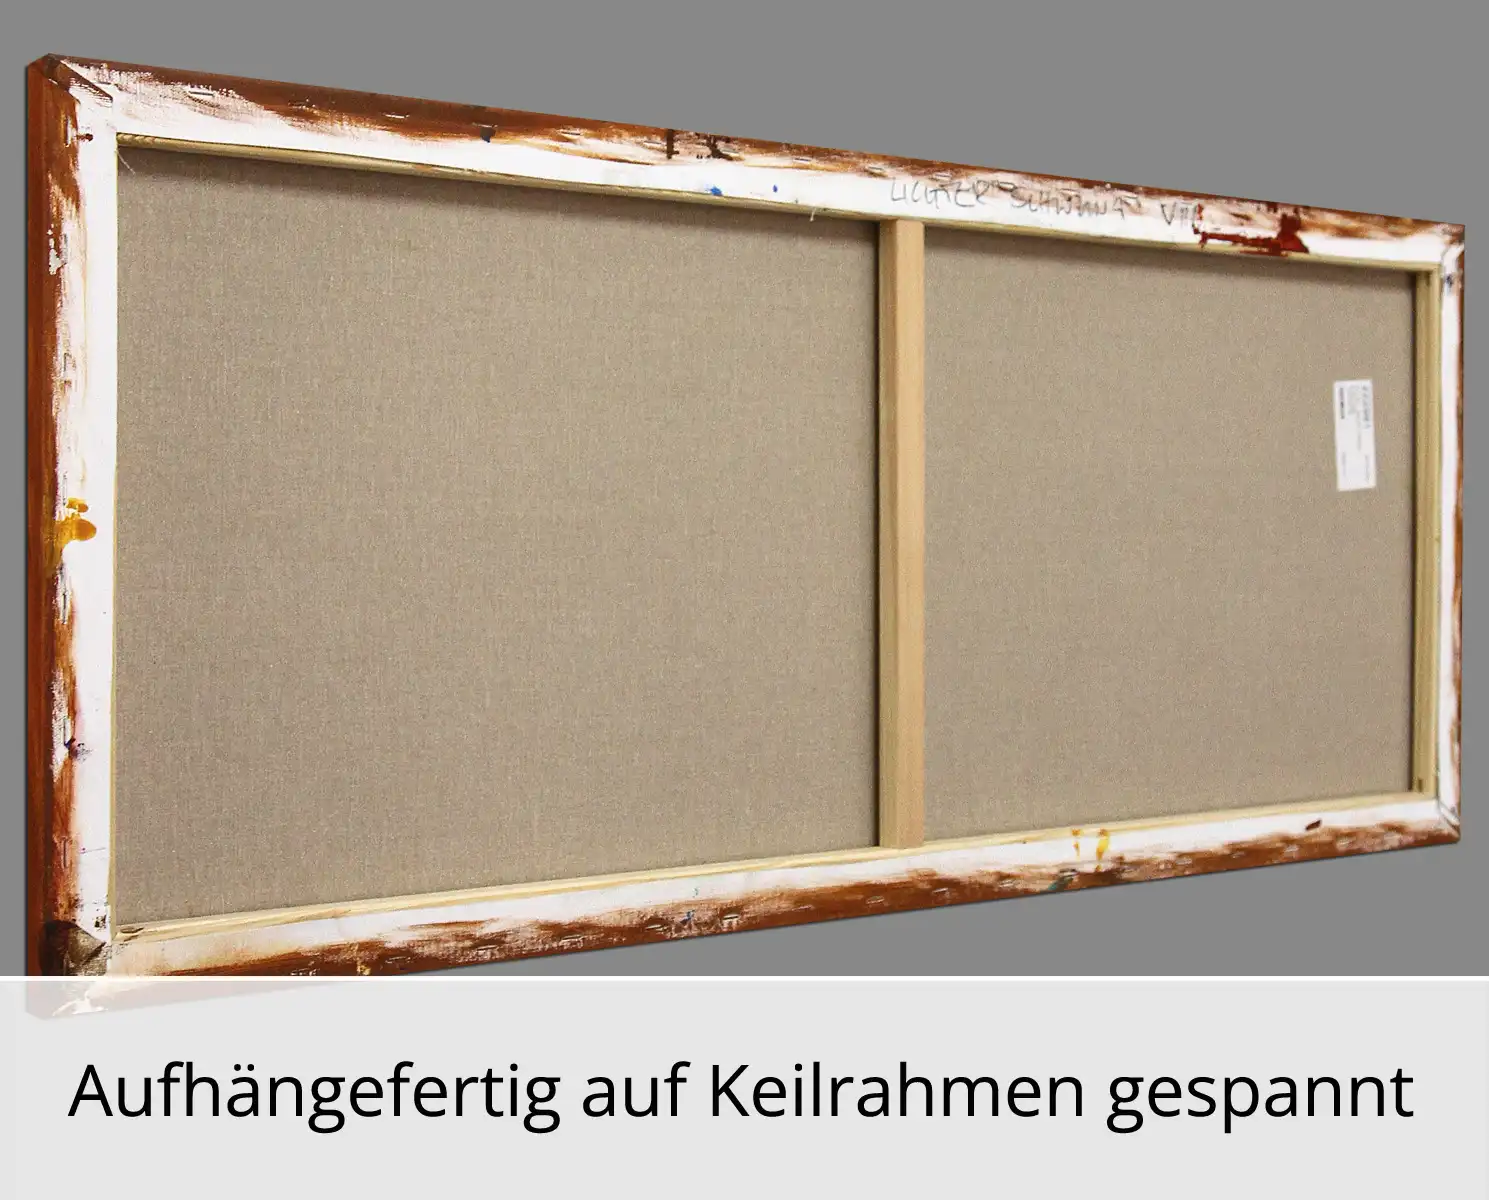 Abstraktes Originalgemälde: "Lichter Schwung VIII", R. König, Unikat